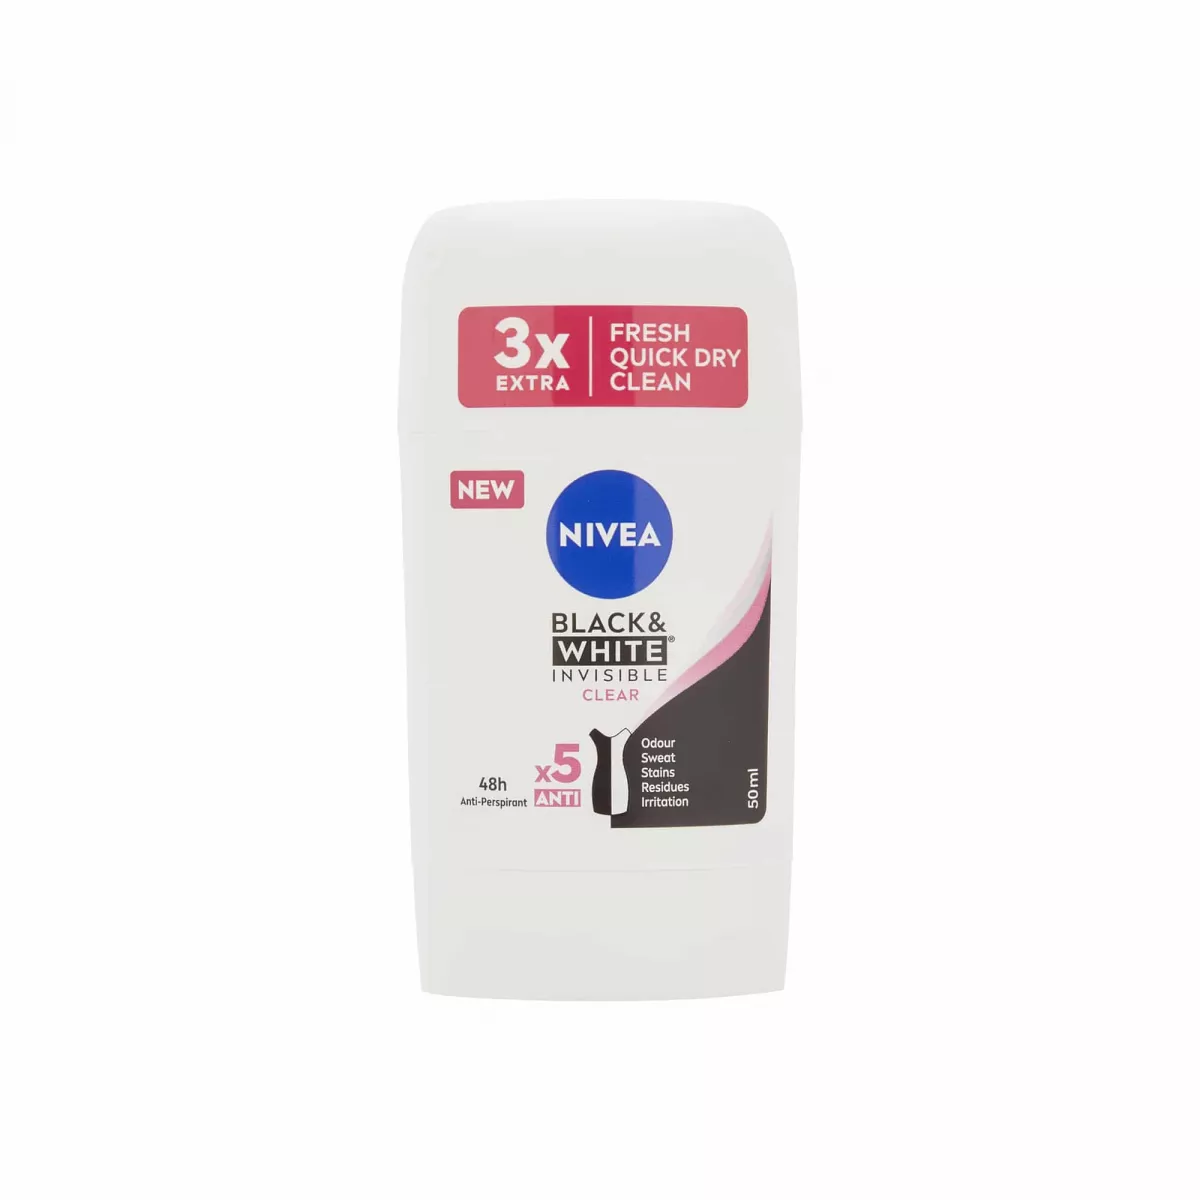 Antiperspirant Deodorant Stick pentru femei Nivea Black & White Invisible Clear, 48h, 40ml, [],drogheriemb.ro